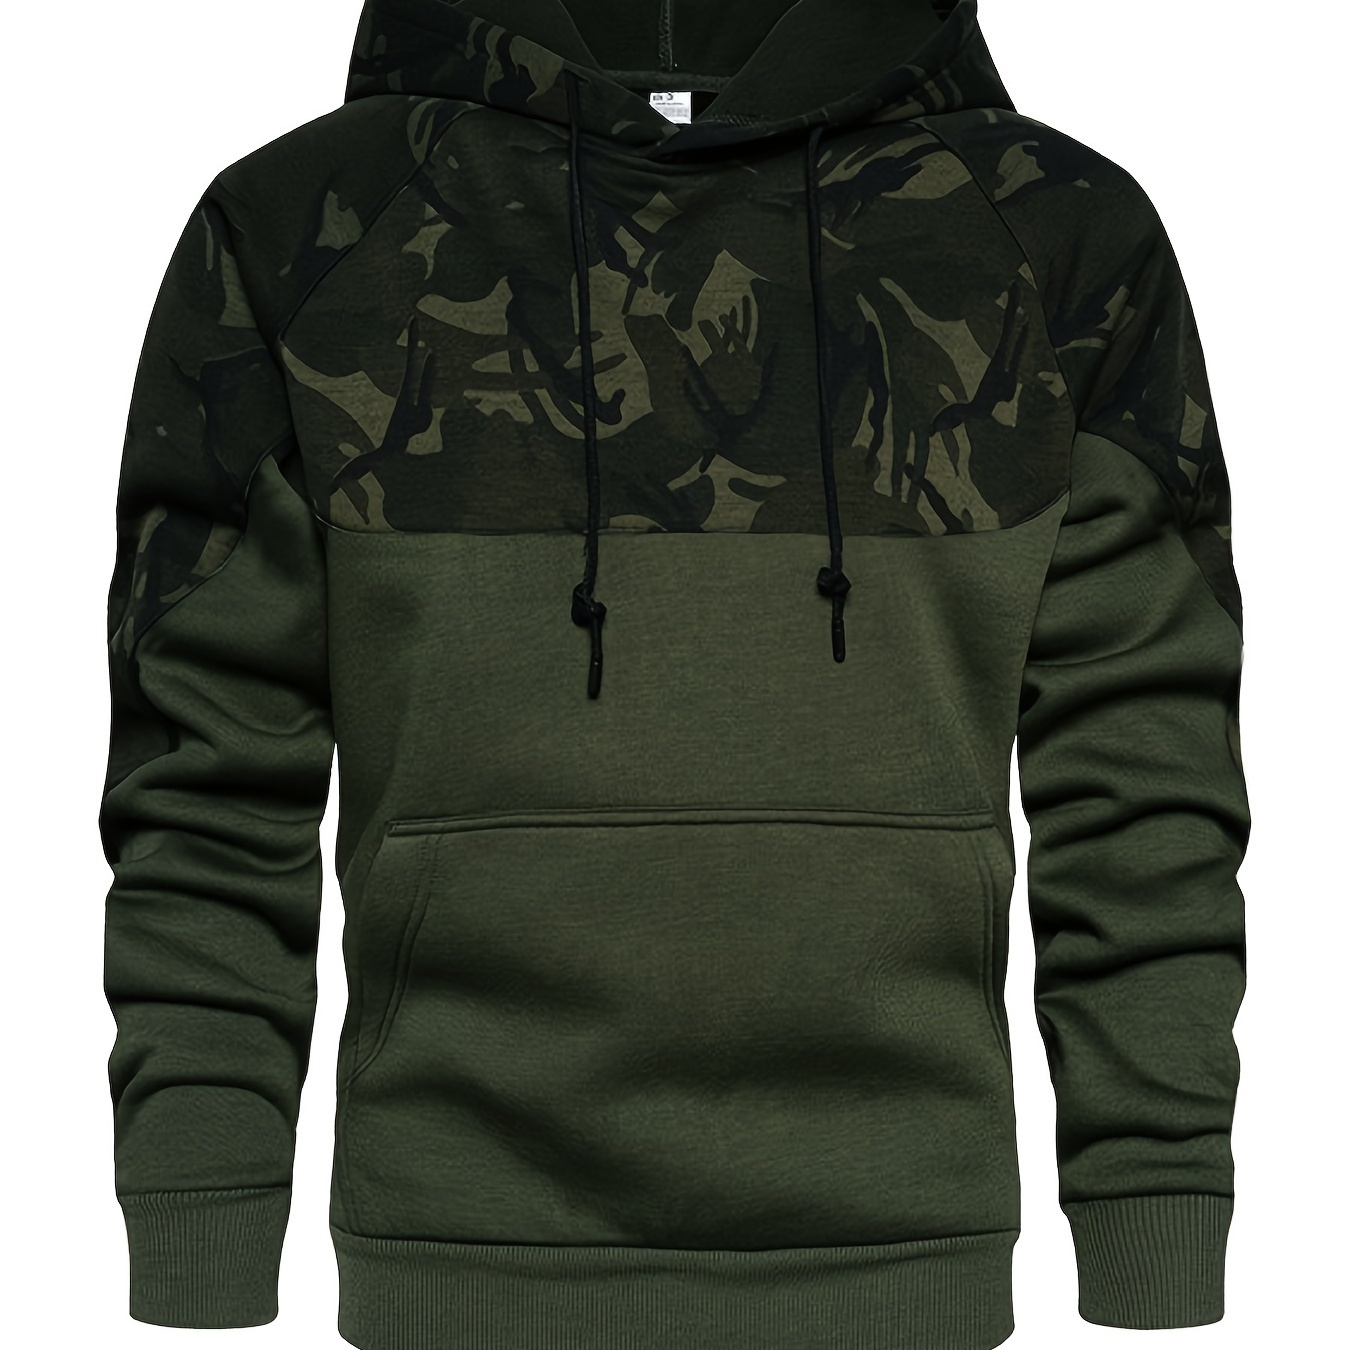 

Camouflage Hoodie, Cool Hoodies For Men, Men's Casual Color Block Design Hooded Sweatshirt With Kangaroo Pocket Streetwear For Winter Fall, As Gifts